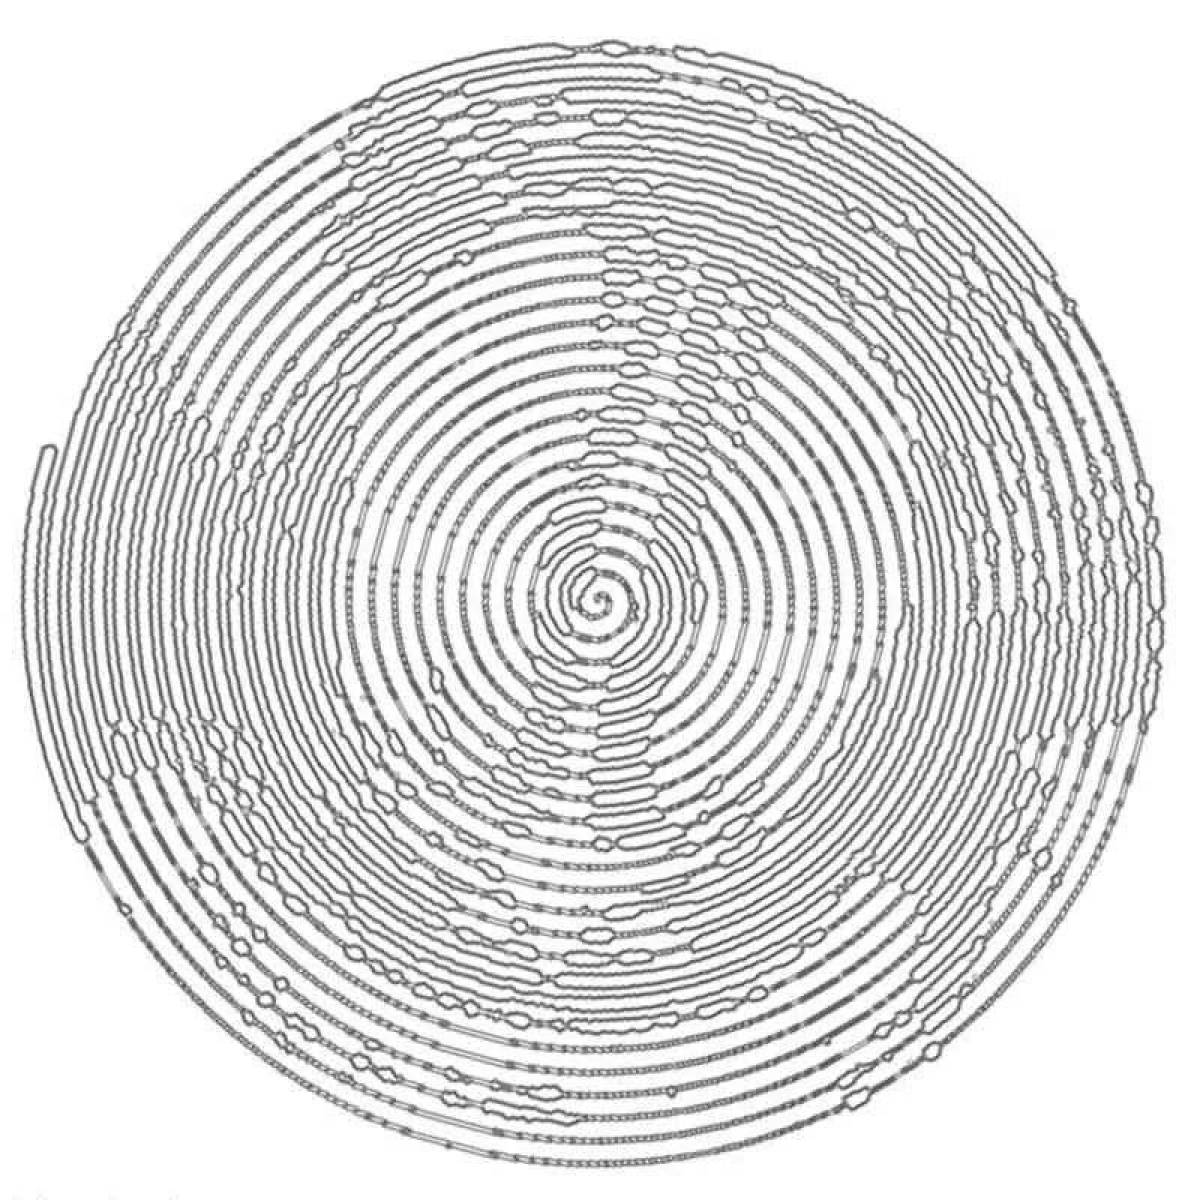 Coloring gentle spiral pattern